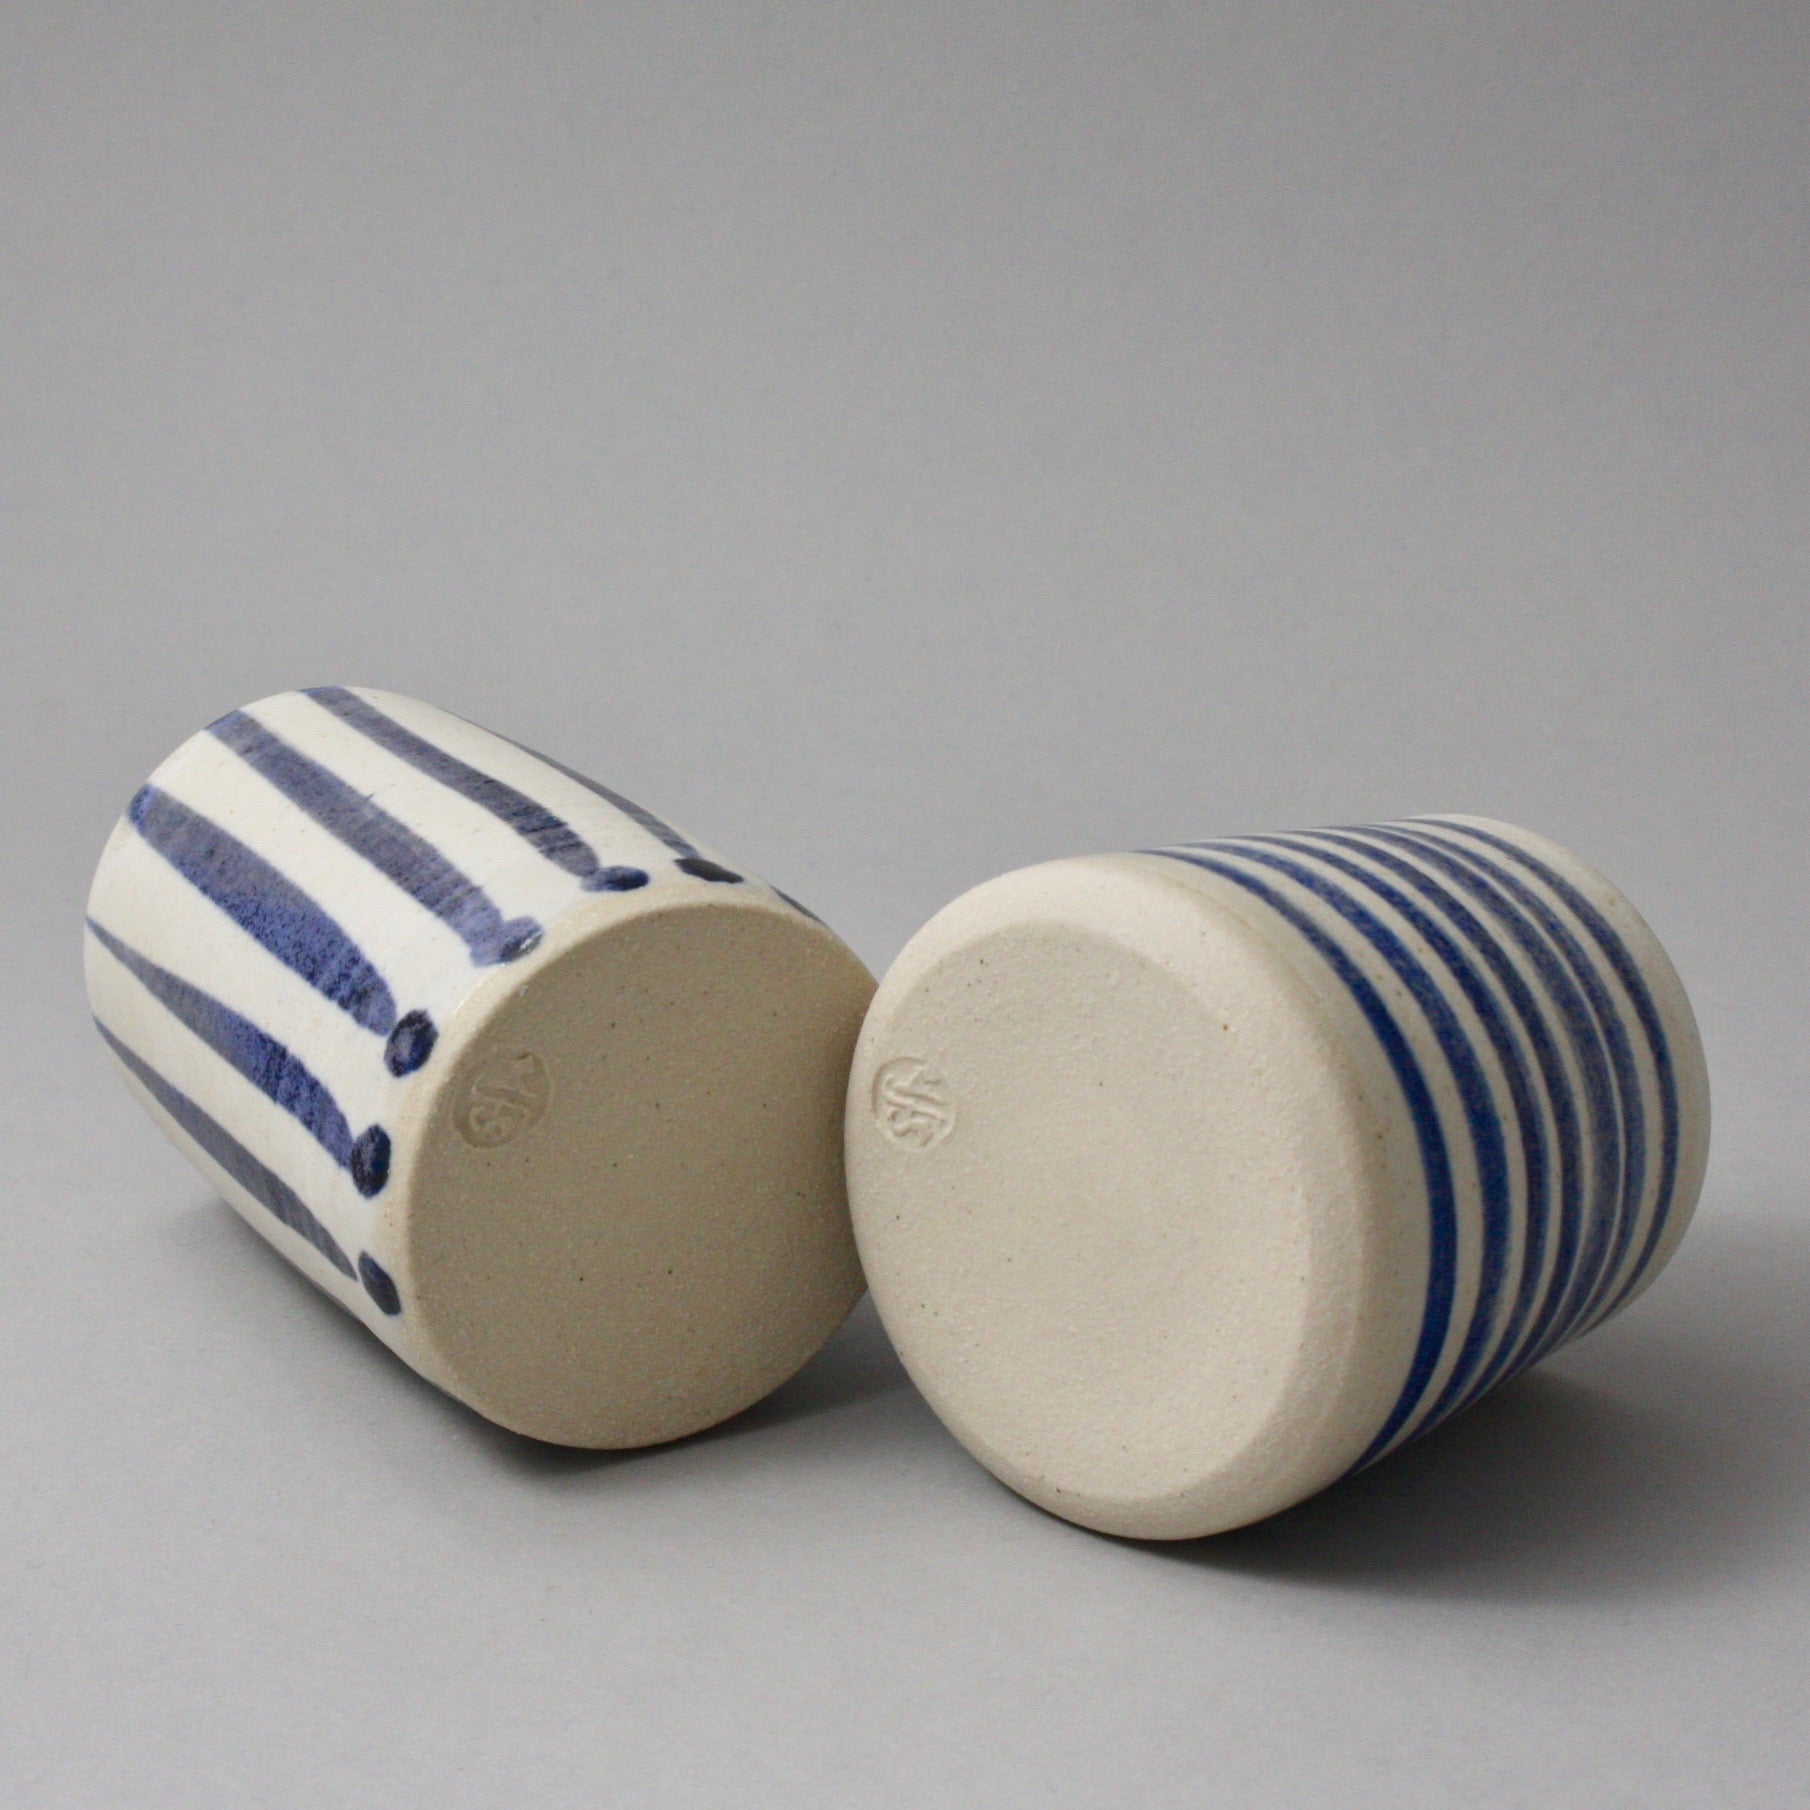 Two tiny vases - striped